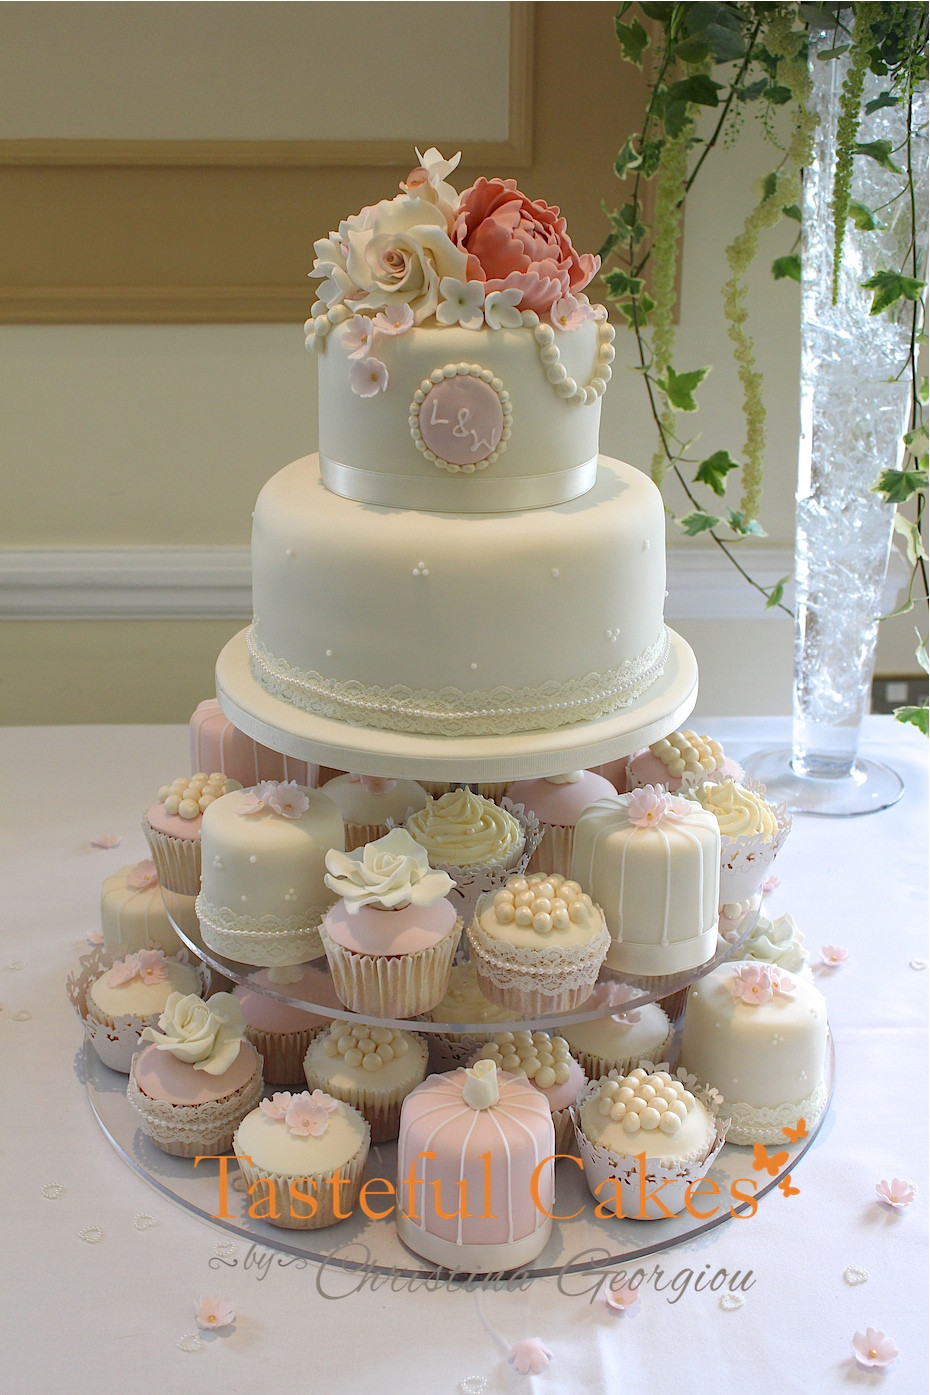 Wedding Cake And Cupcakes
 Tasteful Cakes By Christina Georgiou